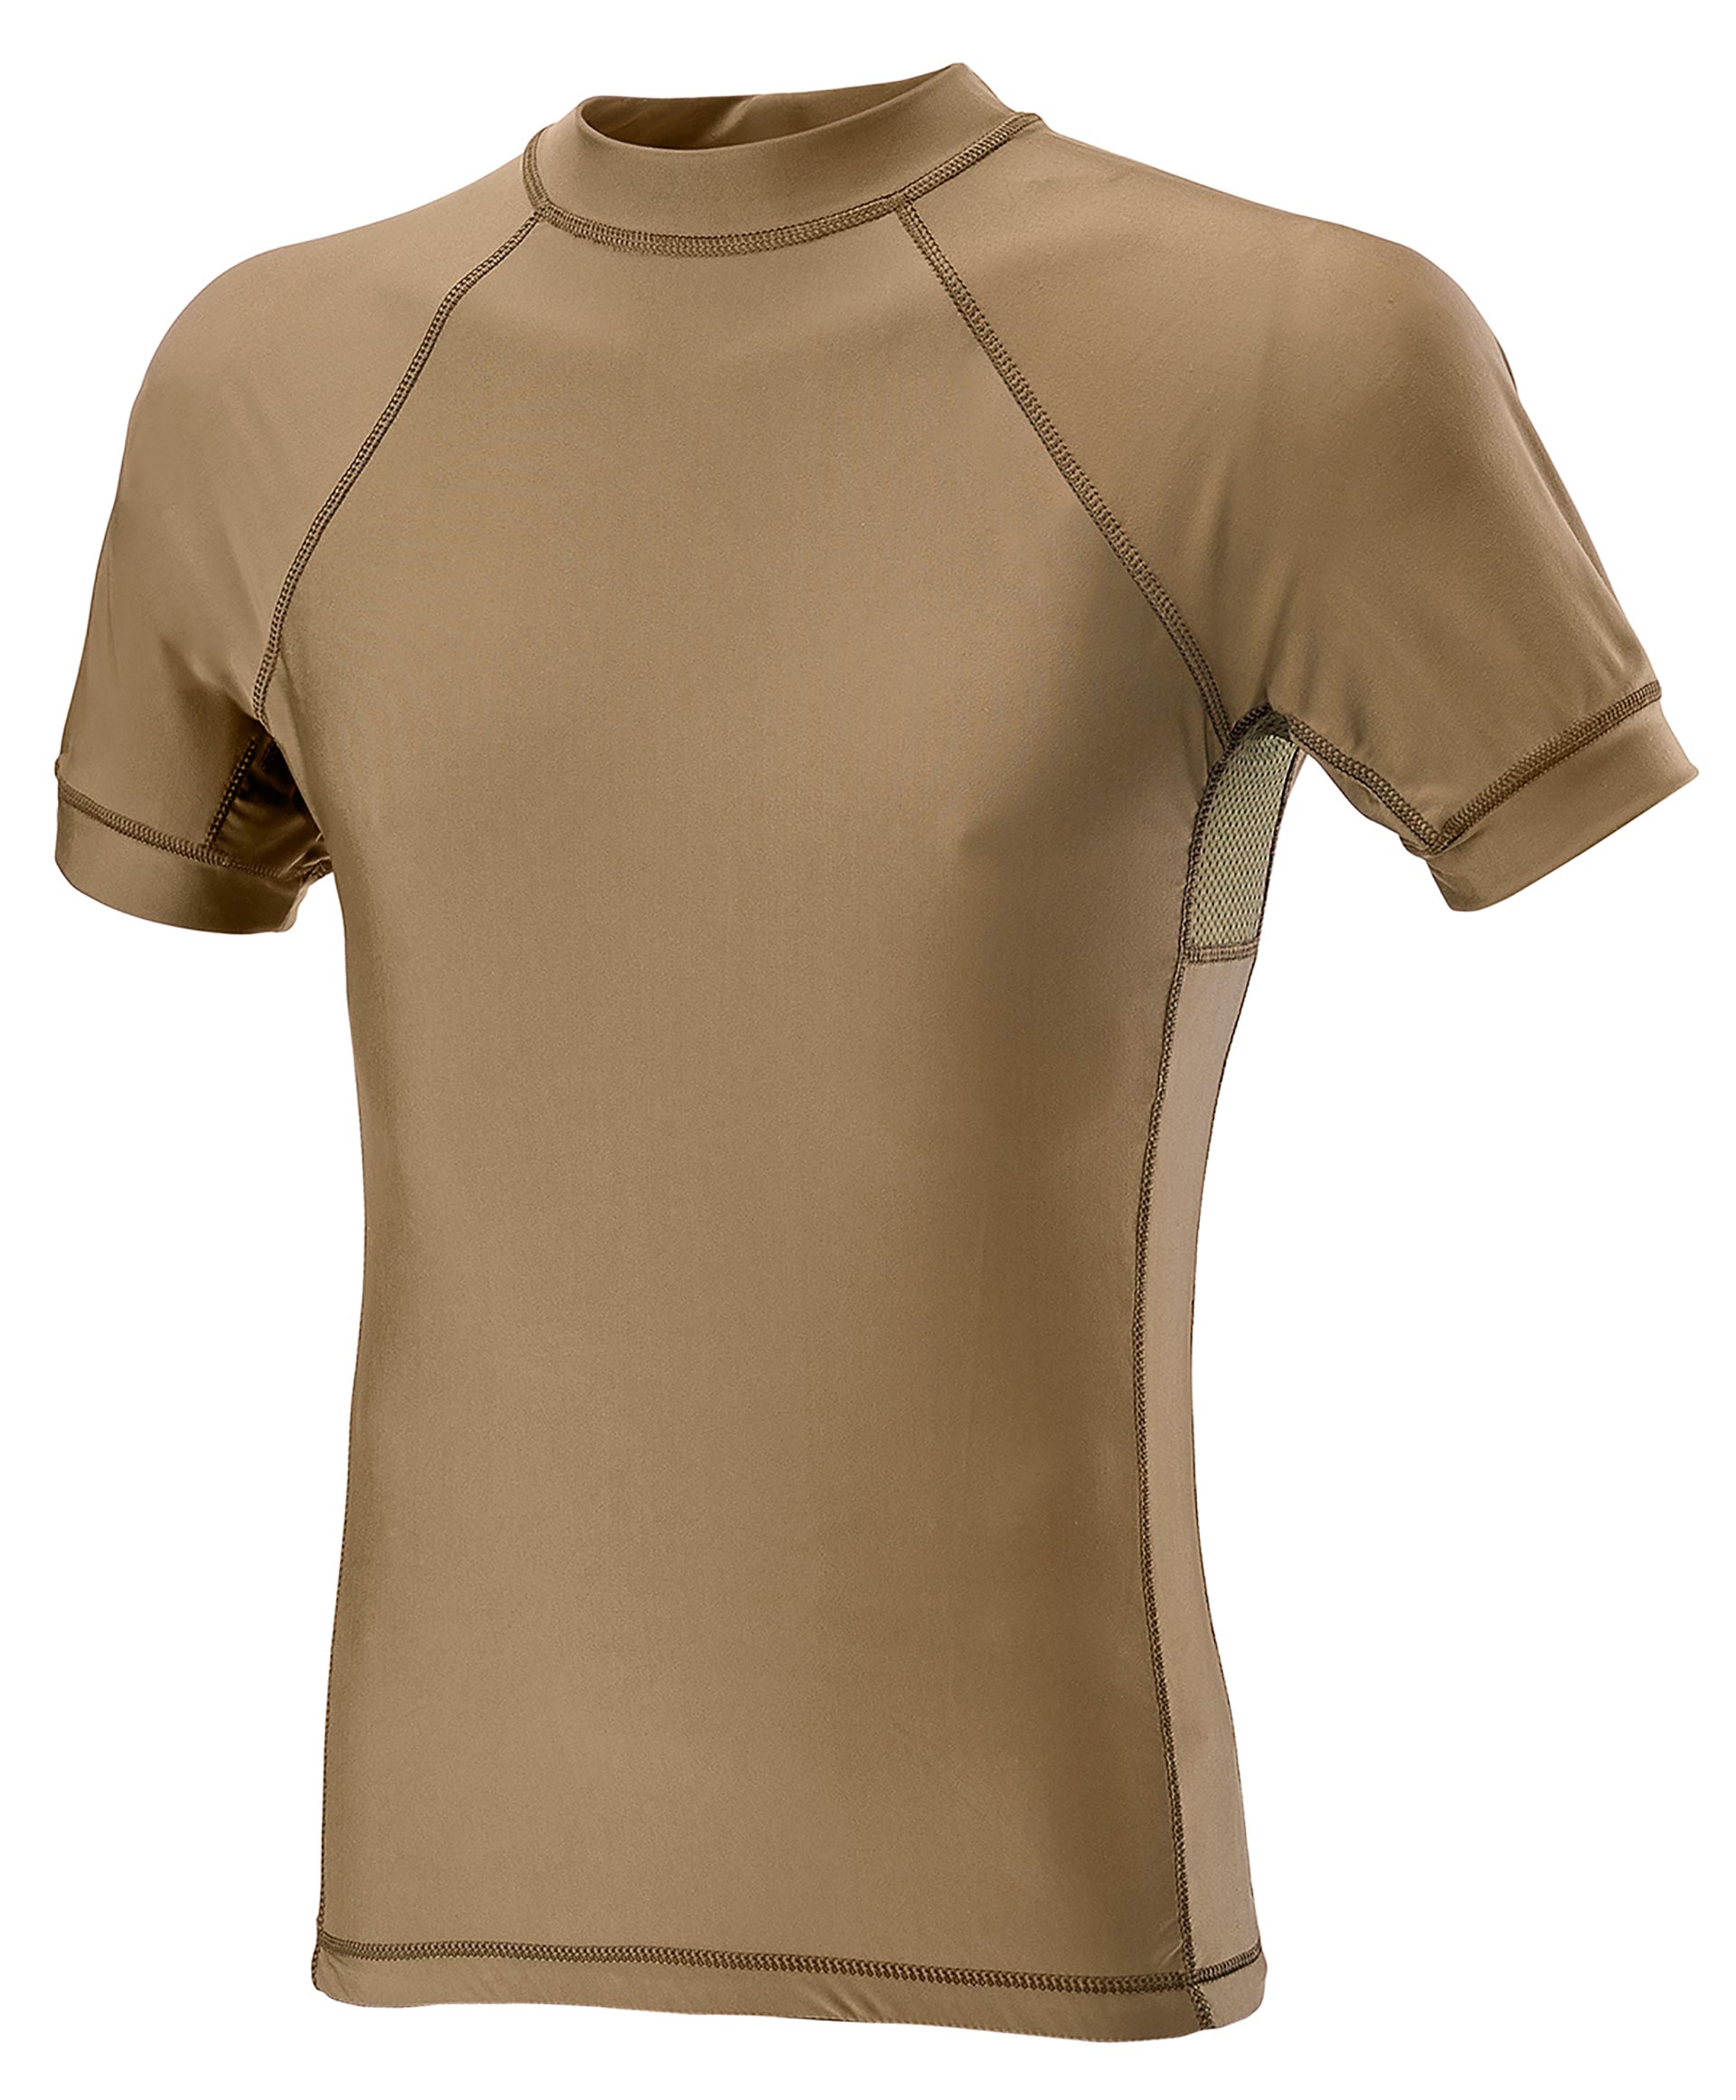 T-shirt Defcon 5 Lycra e mesh short sleeve 